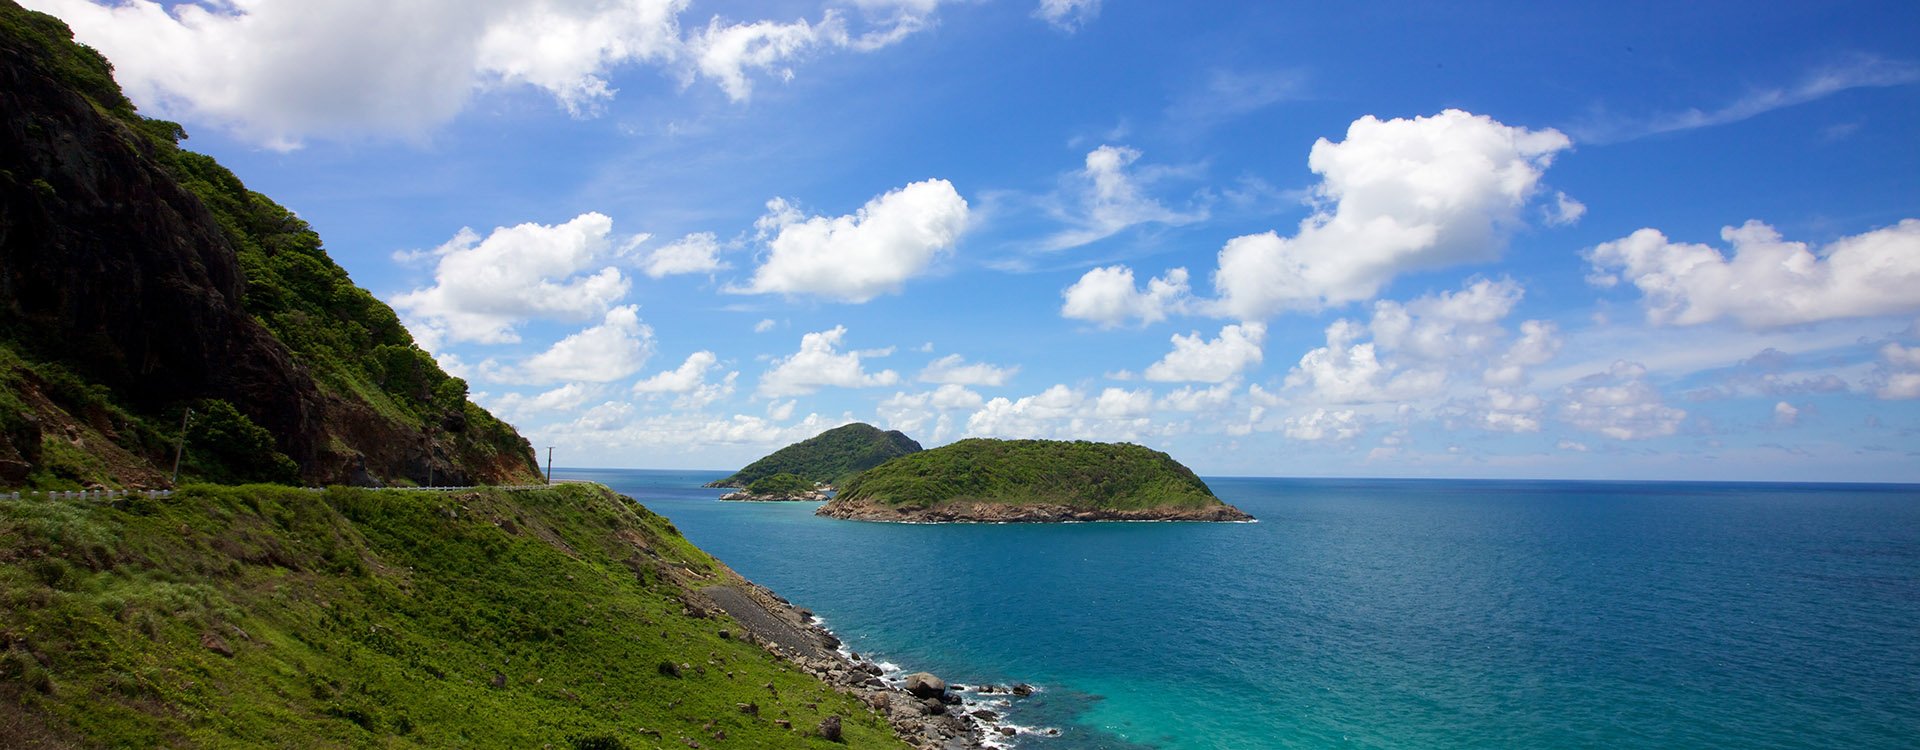 Scenic drive along coast of Con Dao Island, Vietnam blu clear ocean and a bright sunny day